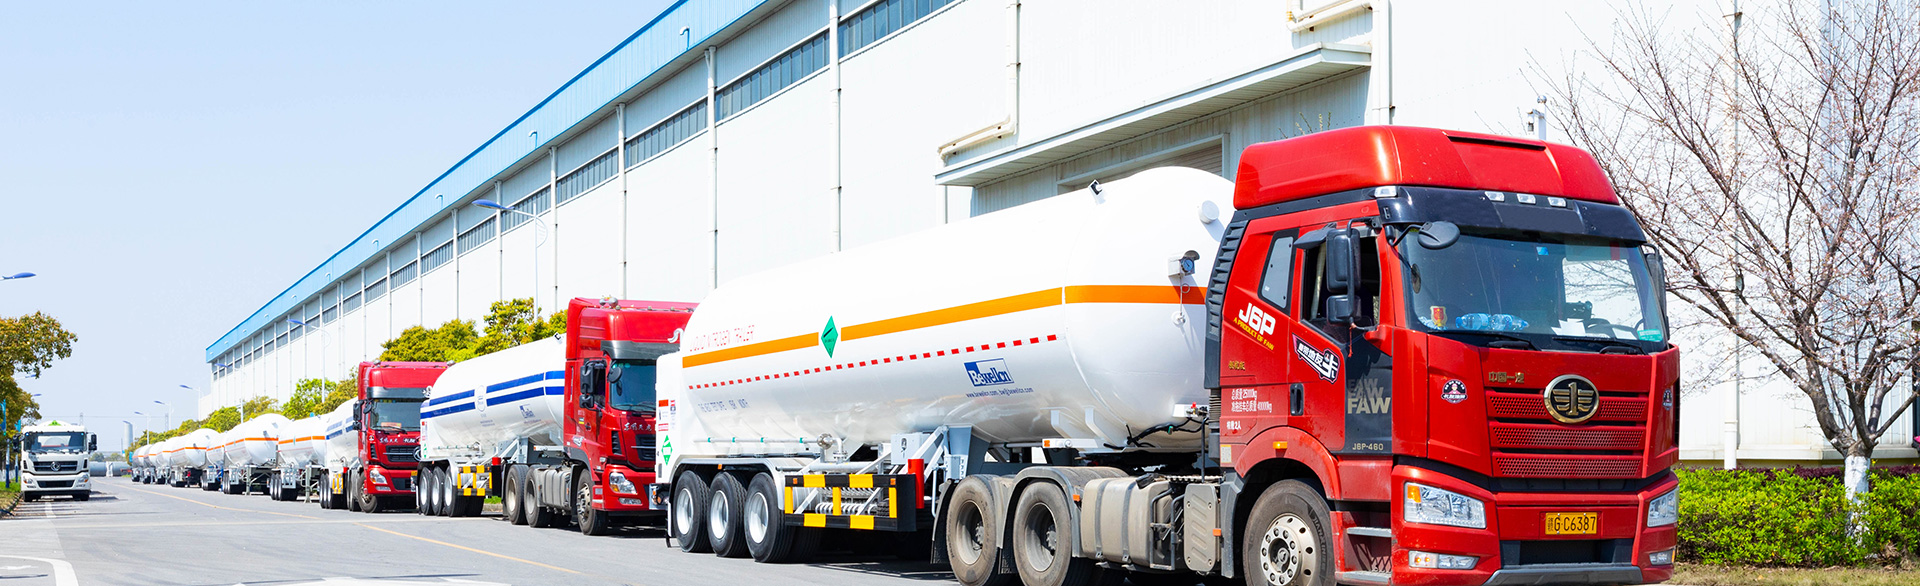 35,600L liquid nitrogen trailers are delivered to famous oil service company